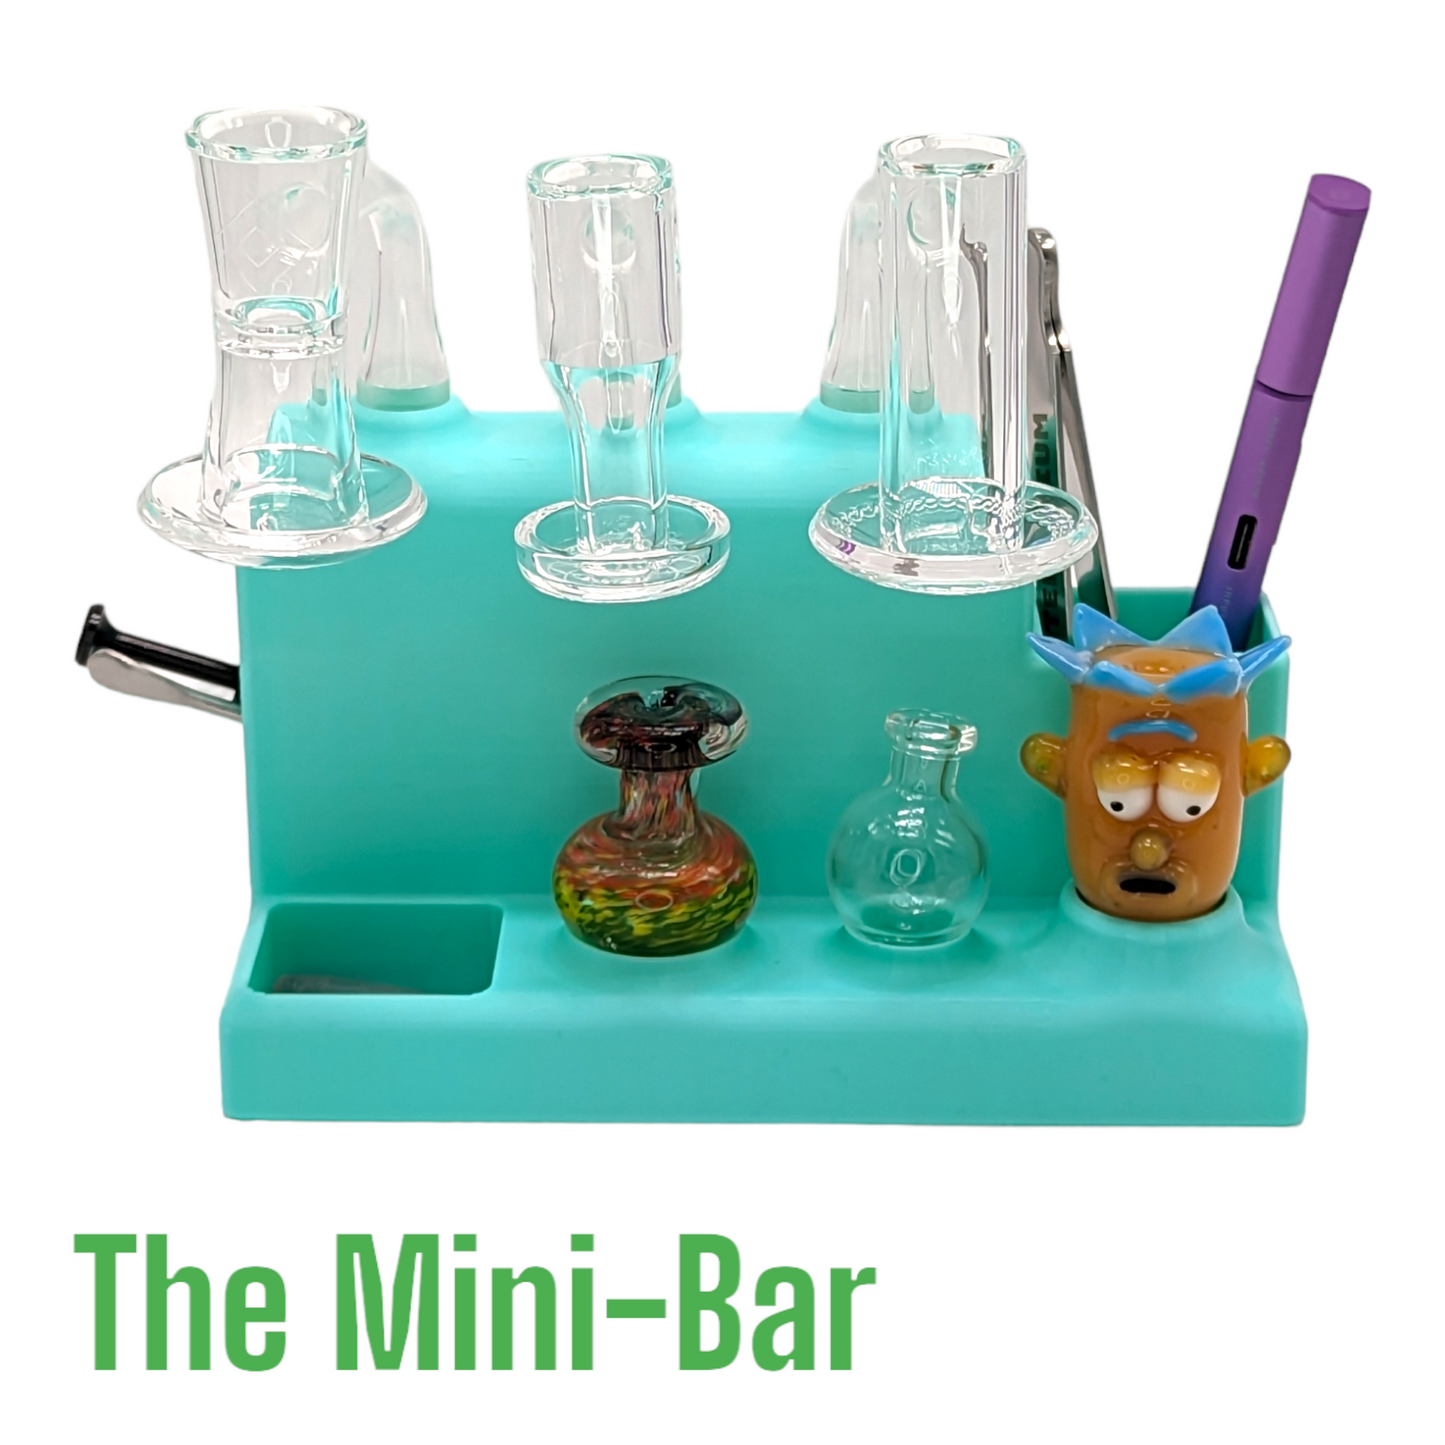 The Mini-Bar